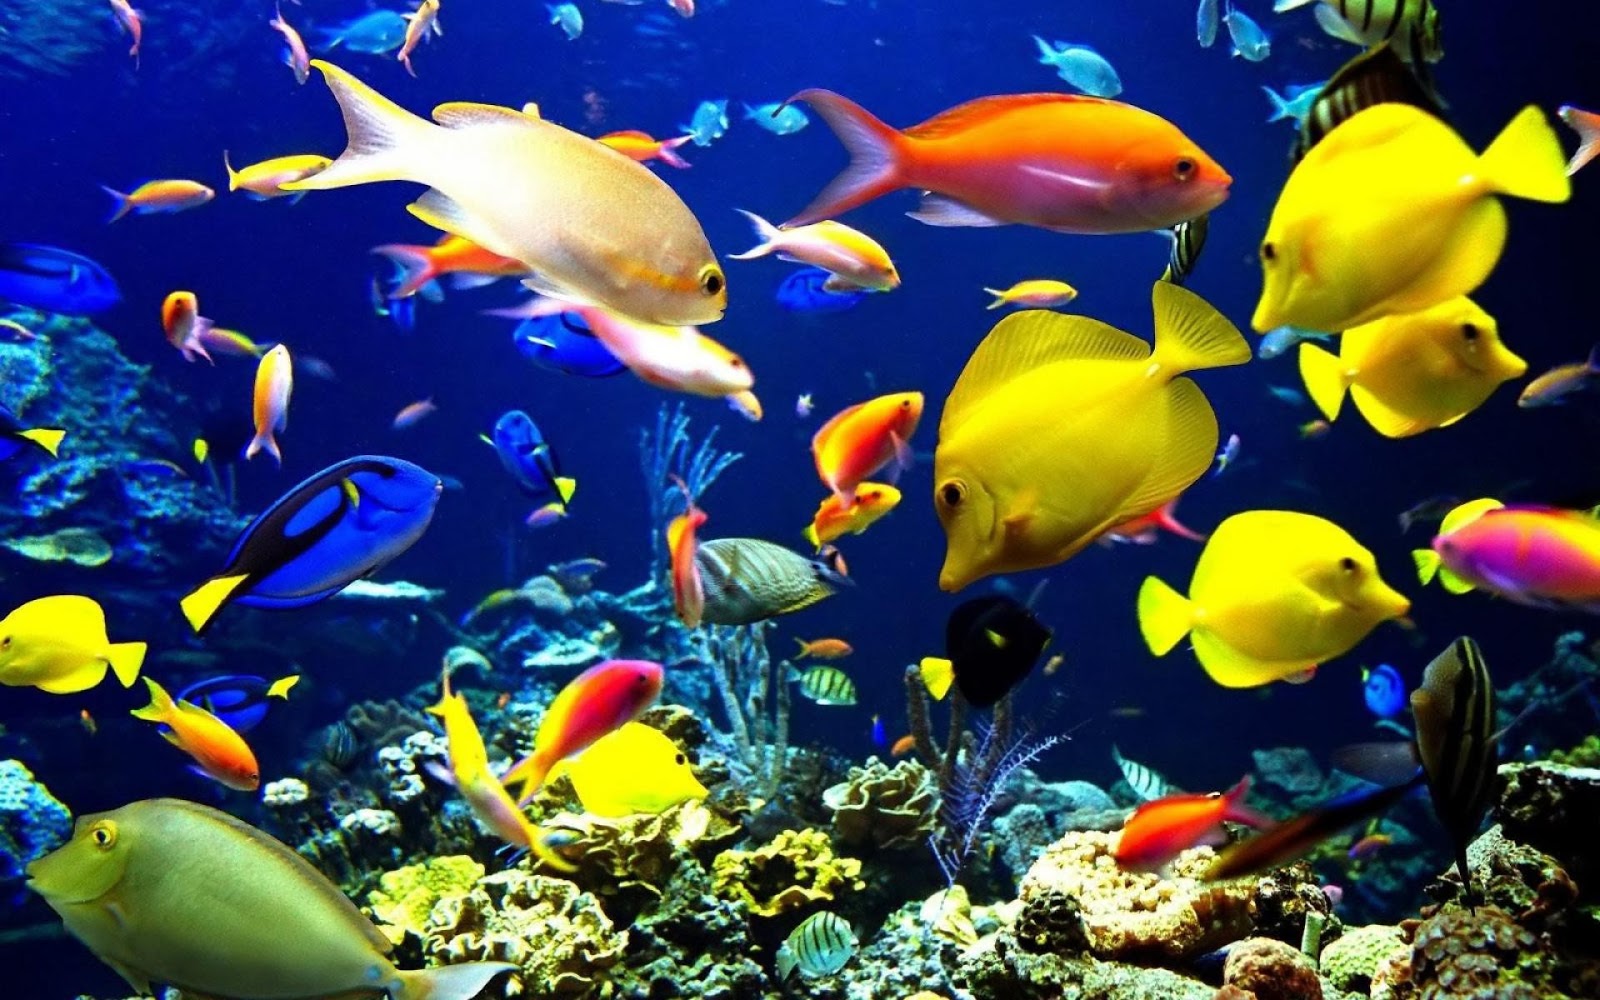 aquarium wallpaper kostenloser download,fisch,korallenrifffische,unter wasser,korallenriff,meeresbiologie